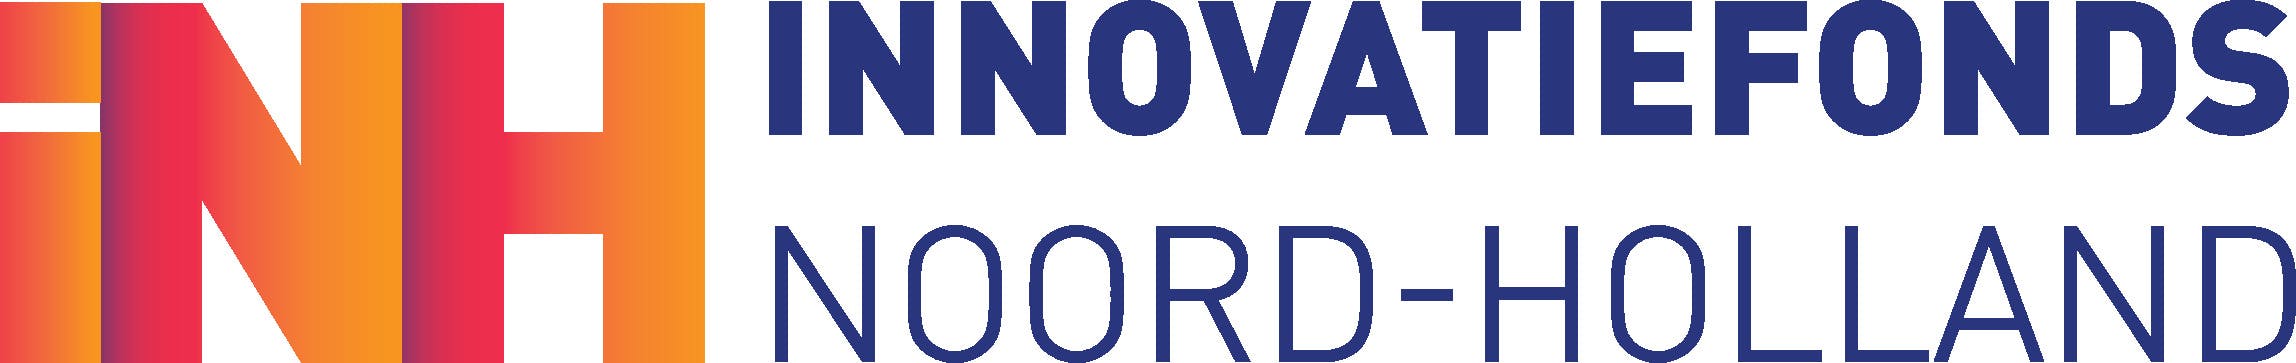 Innovatiefonds Noord-Holland